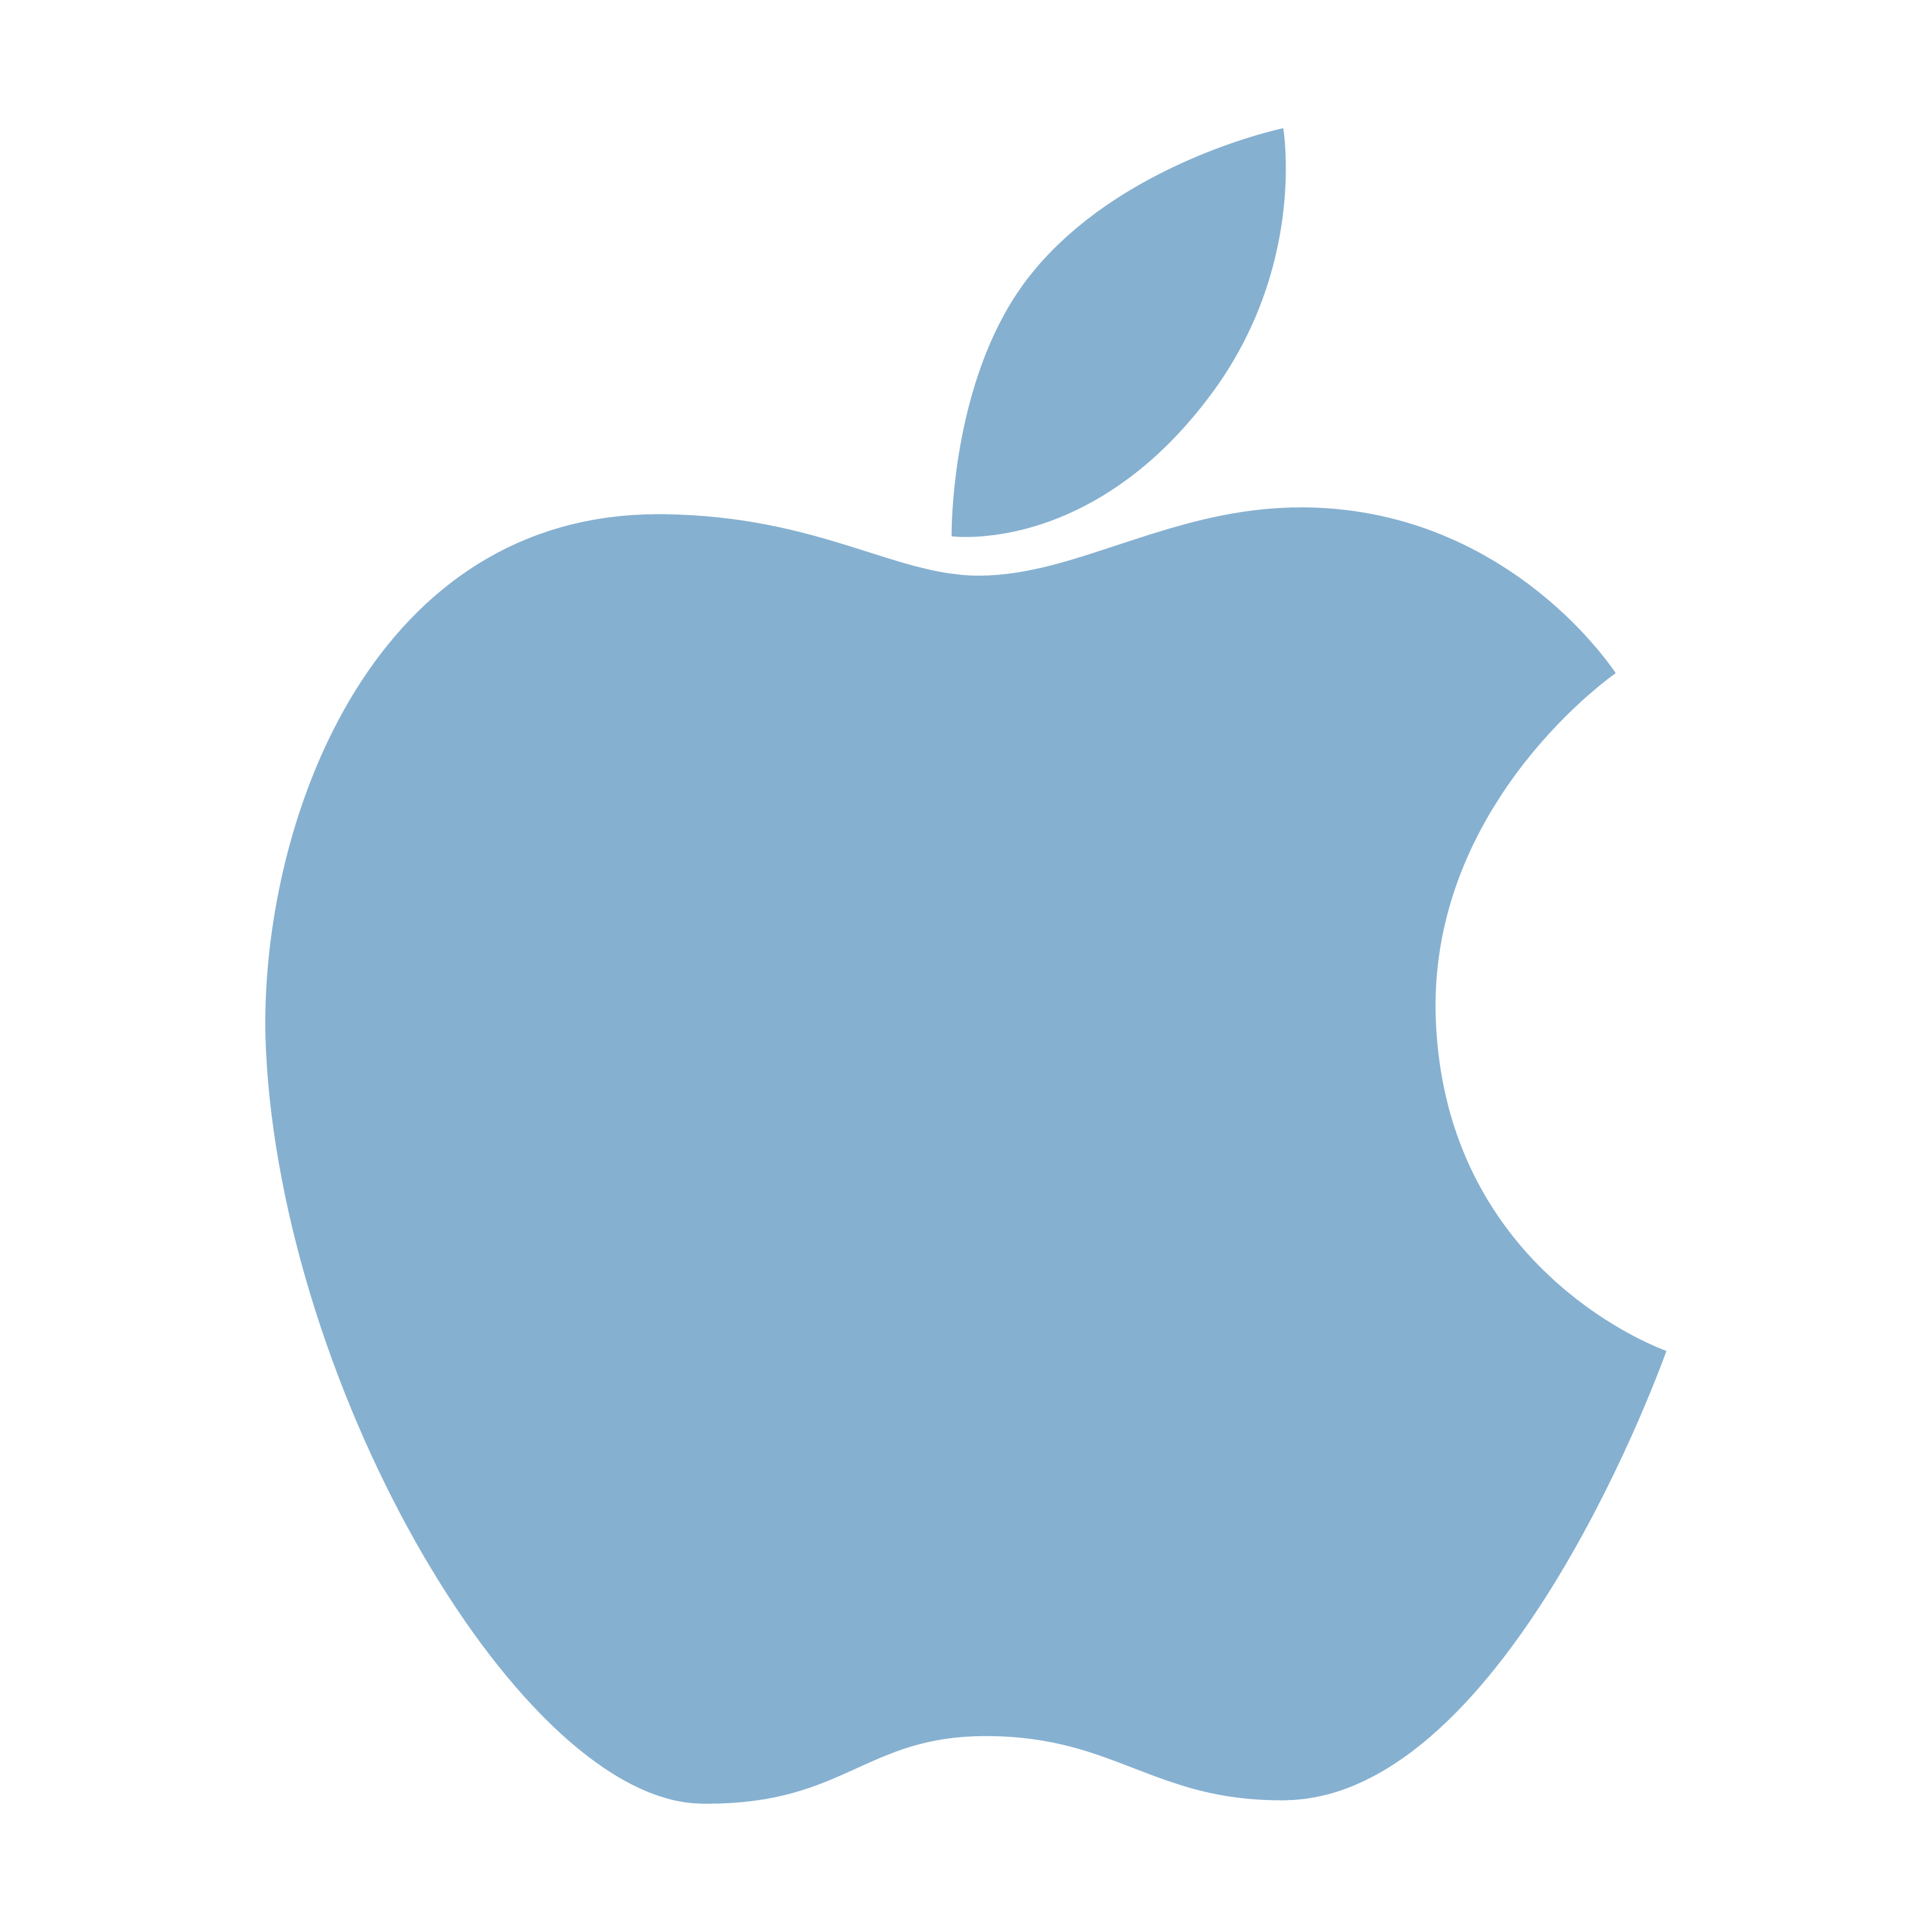 Iphone 5 apple logo clipart - ClipartFox